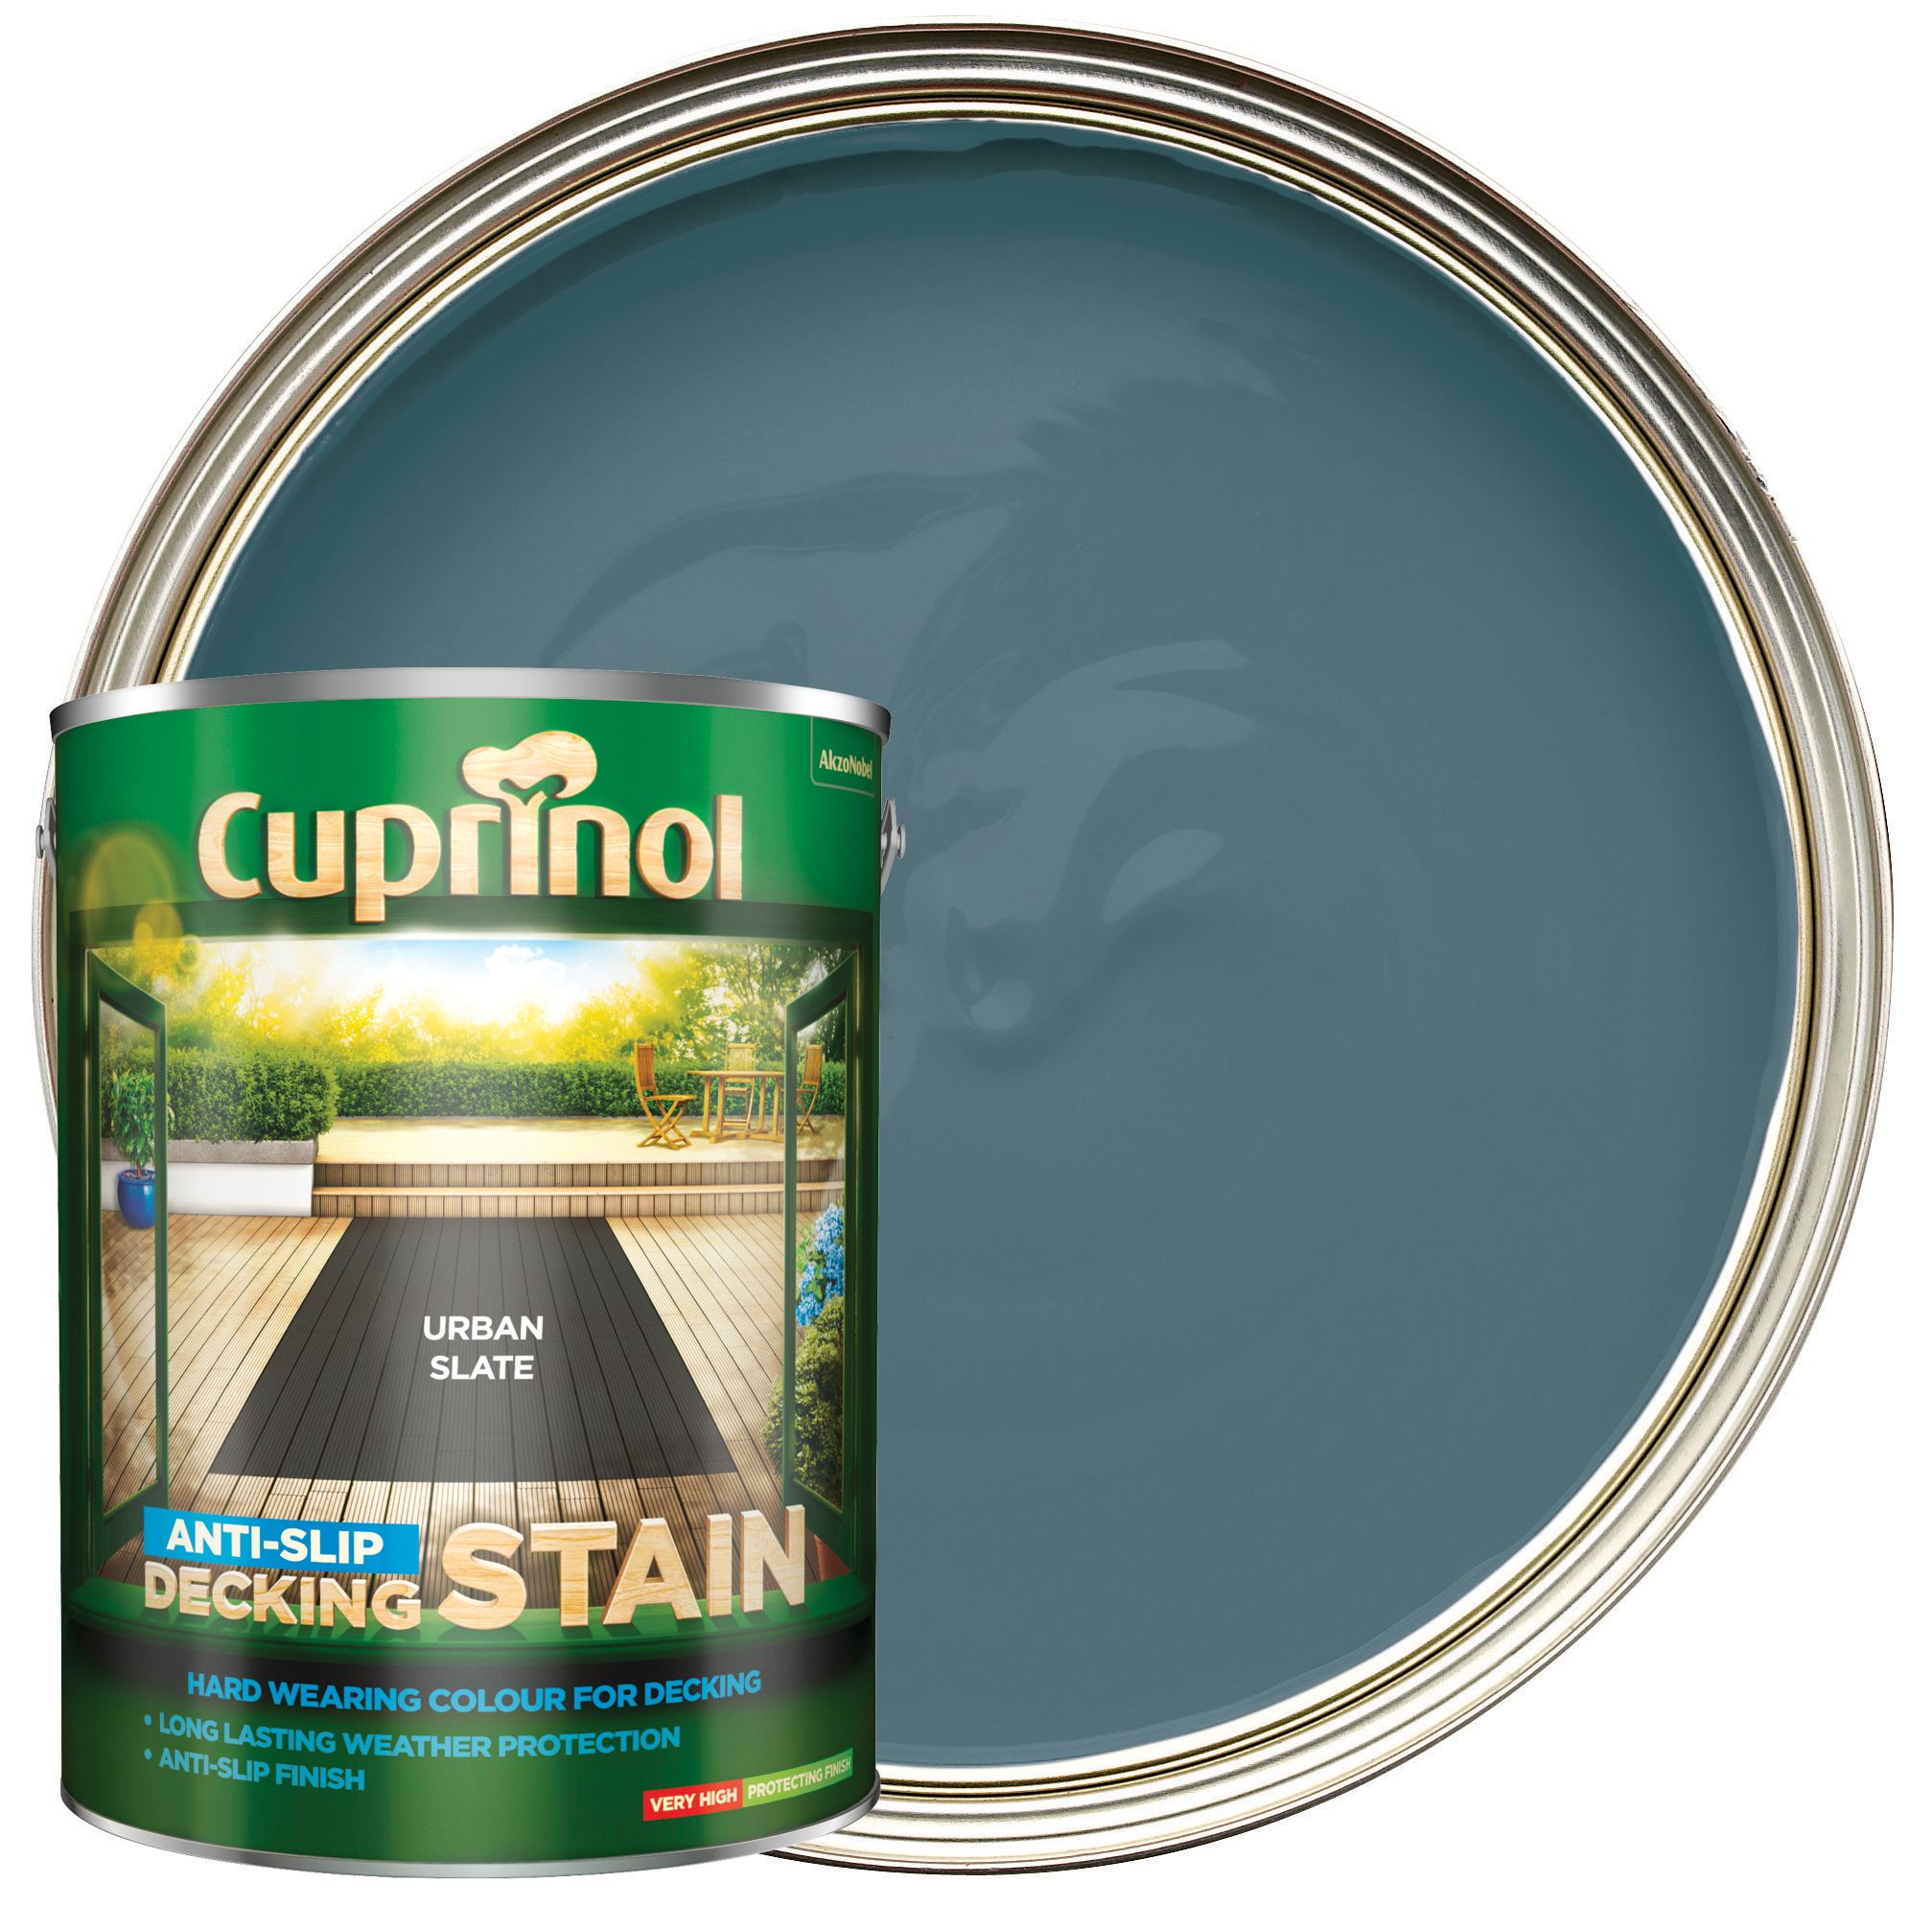 Image of Cuprinol Anti-Slip Decking Stain Urban Slate 5L